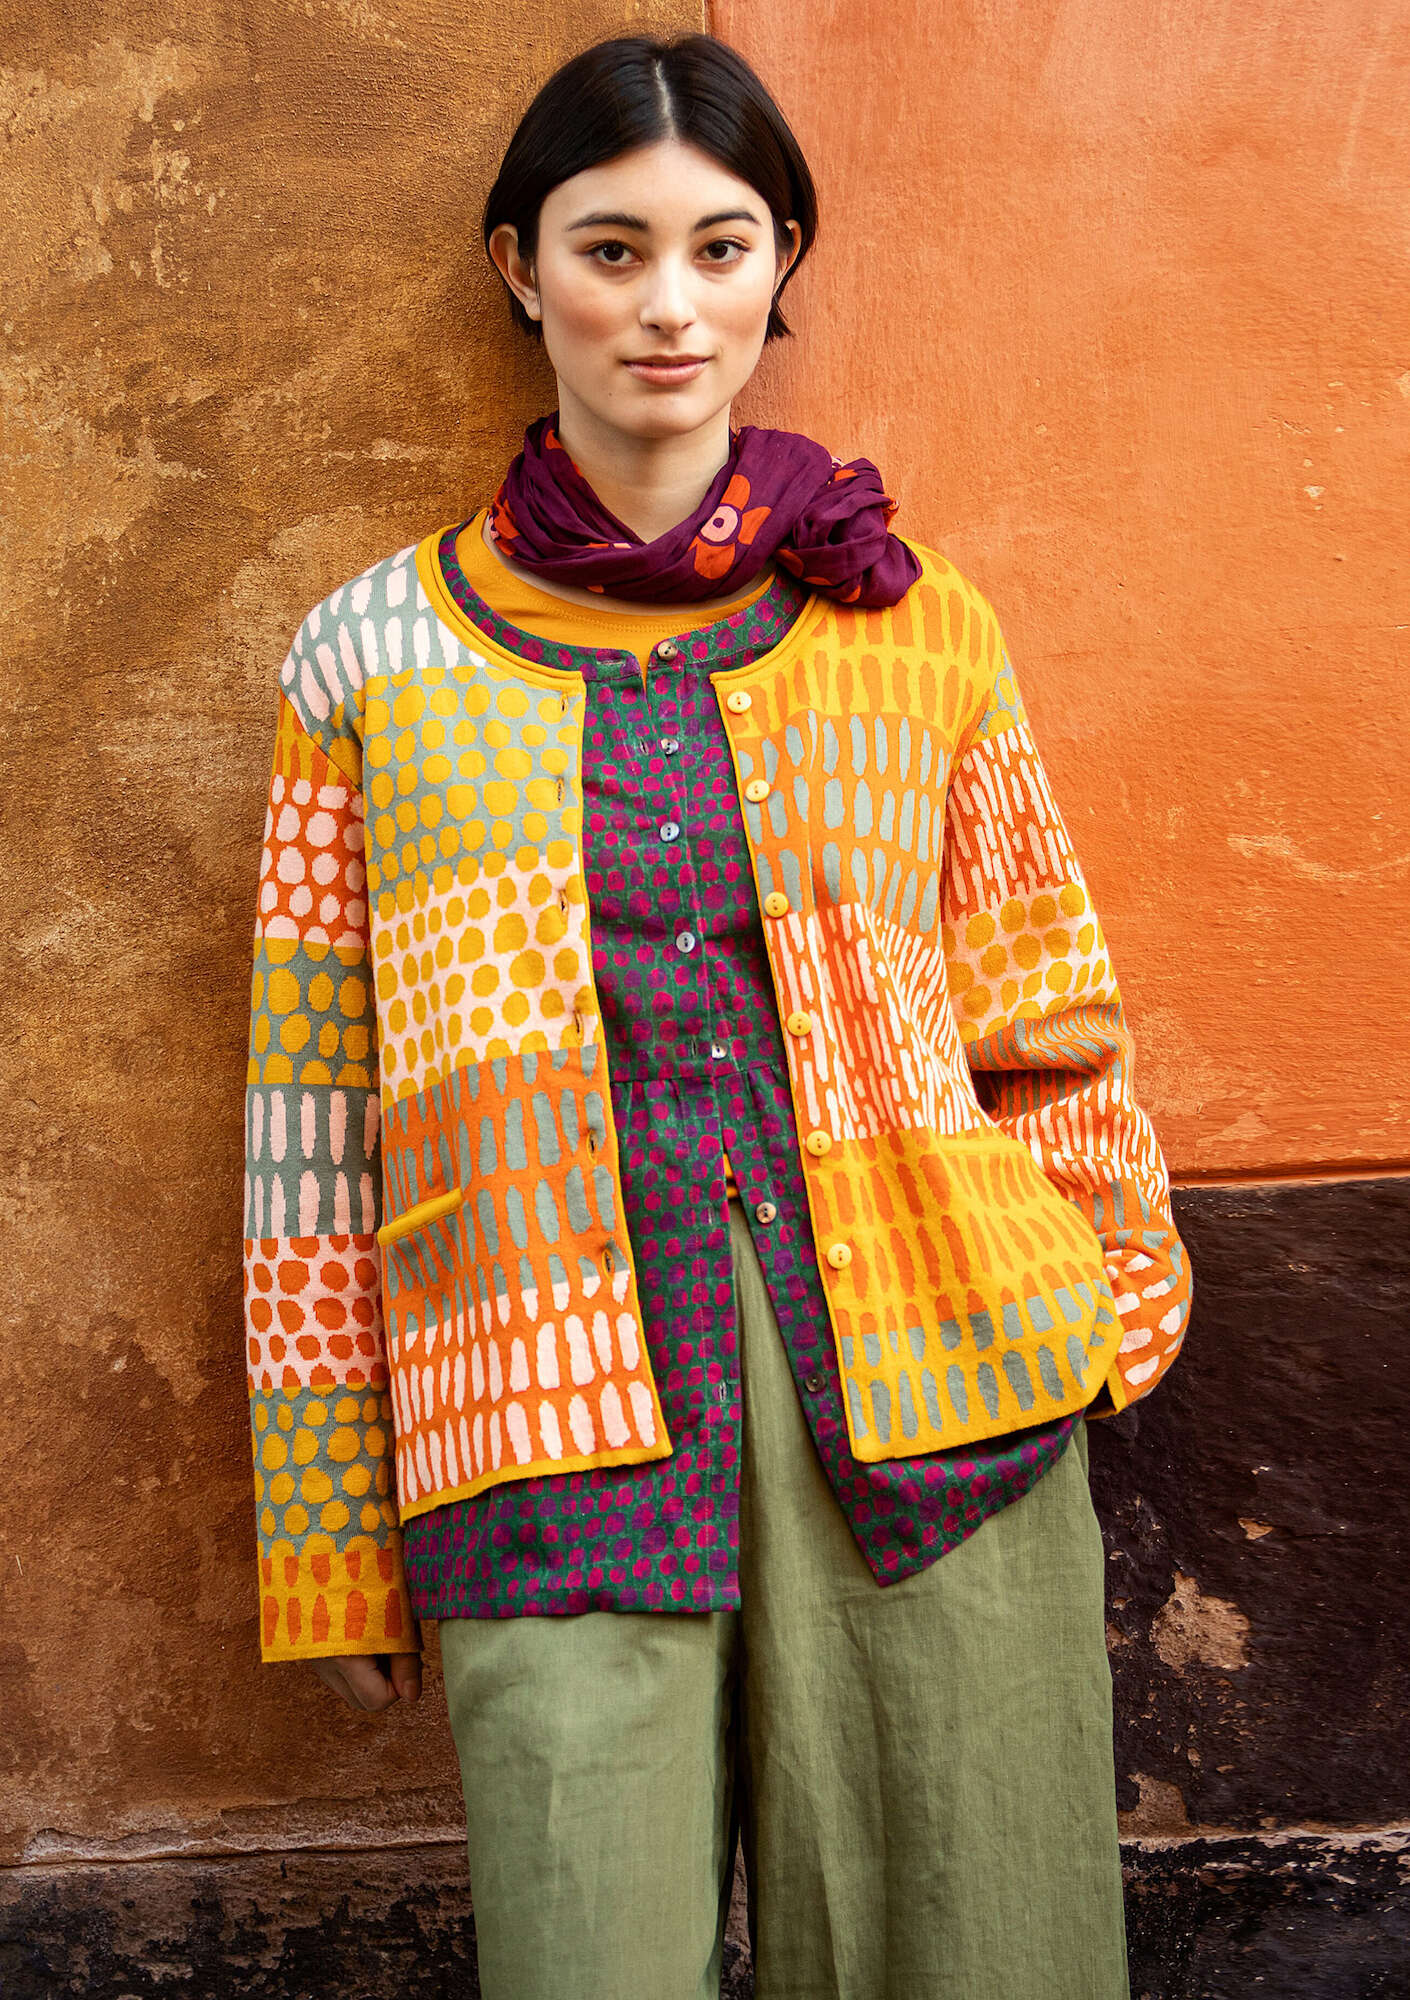 “Ottilia” artist’s blouse in organic cotton dark hydrangea